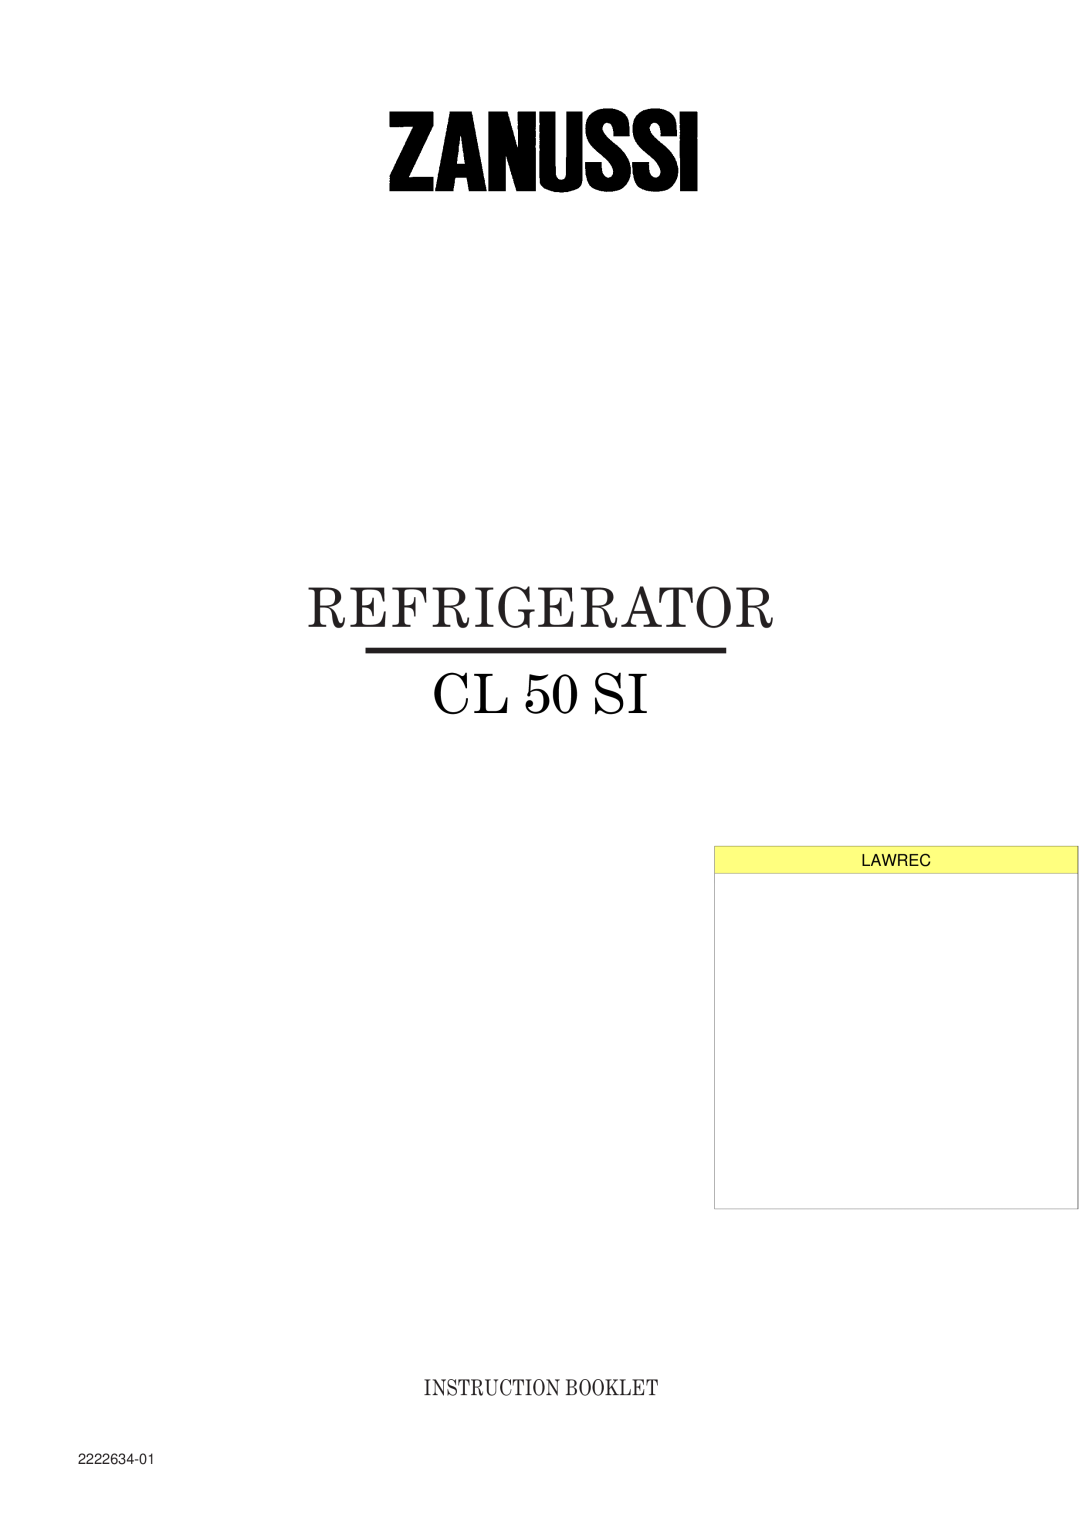 Zanussi CL 50 SI manual Refrigerator, Instruction Booklet, 2222634-01 